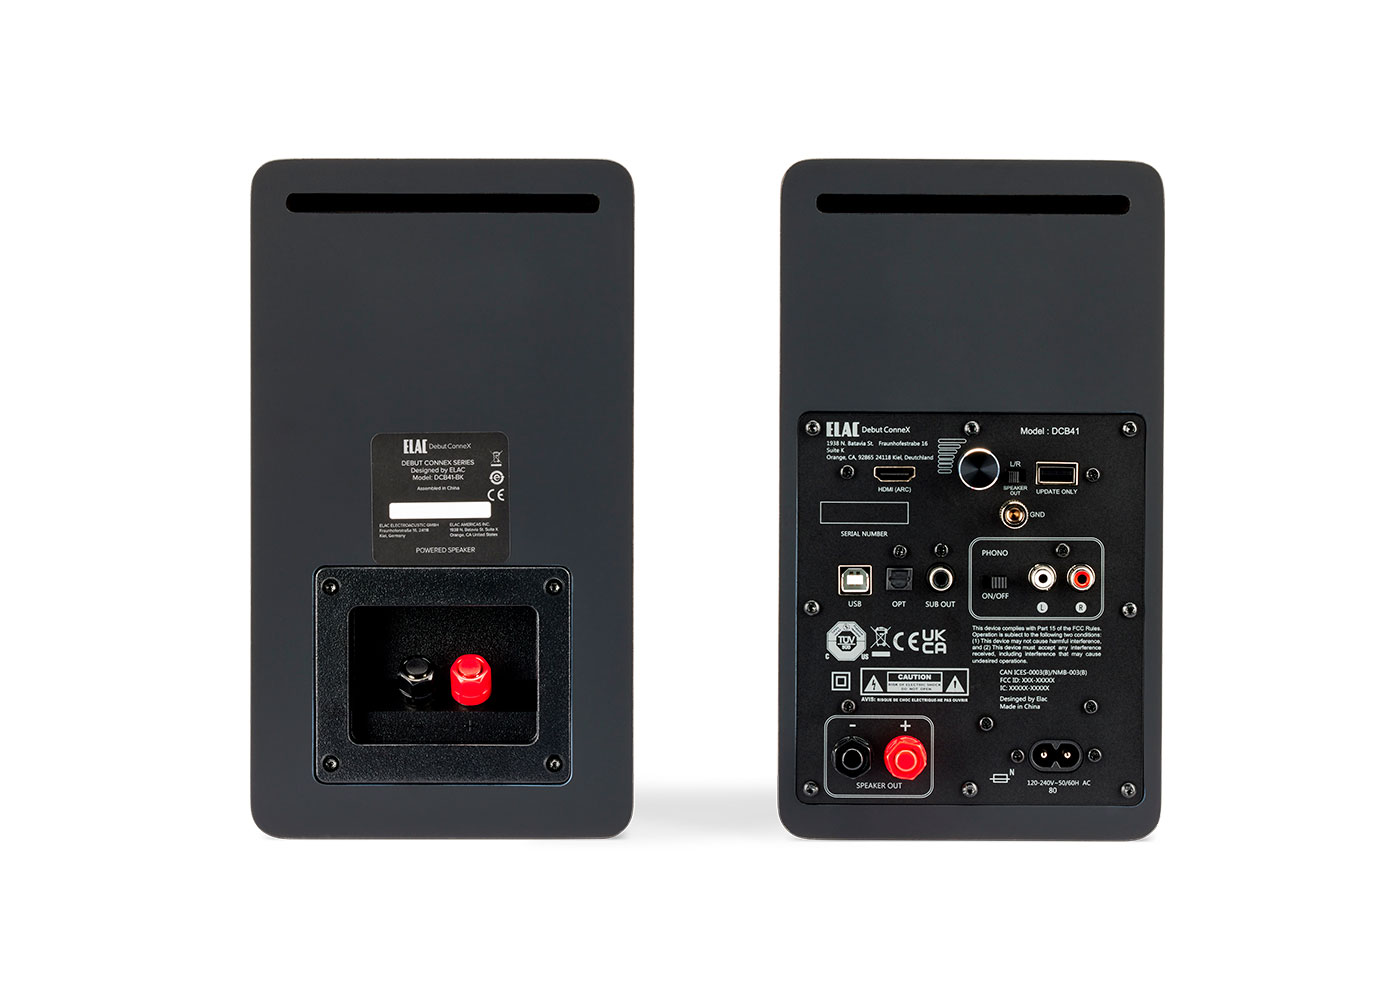 Debut Connex Dcb-41 
Powered Speakers (Walnut)